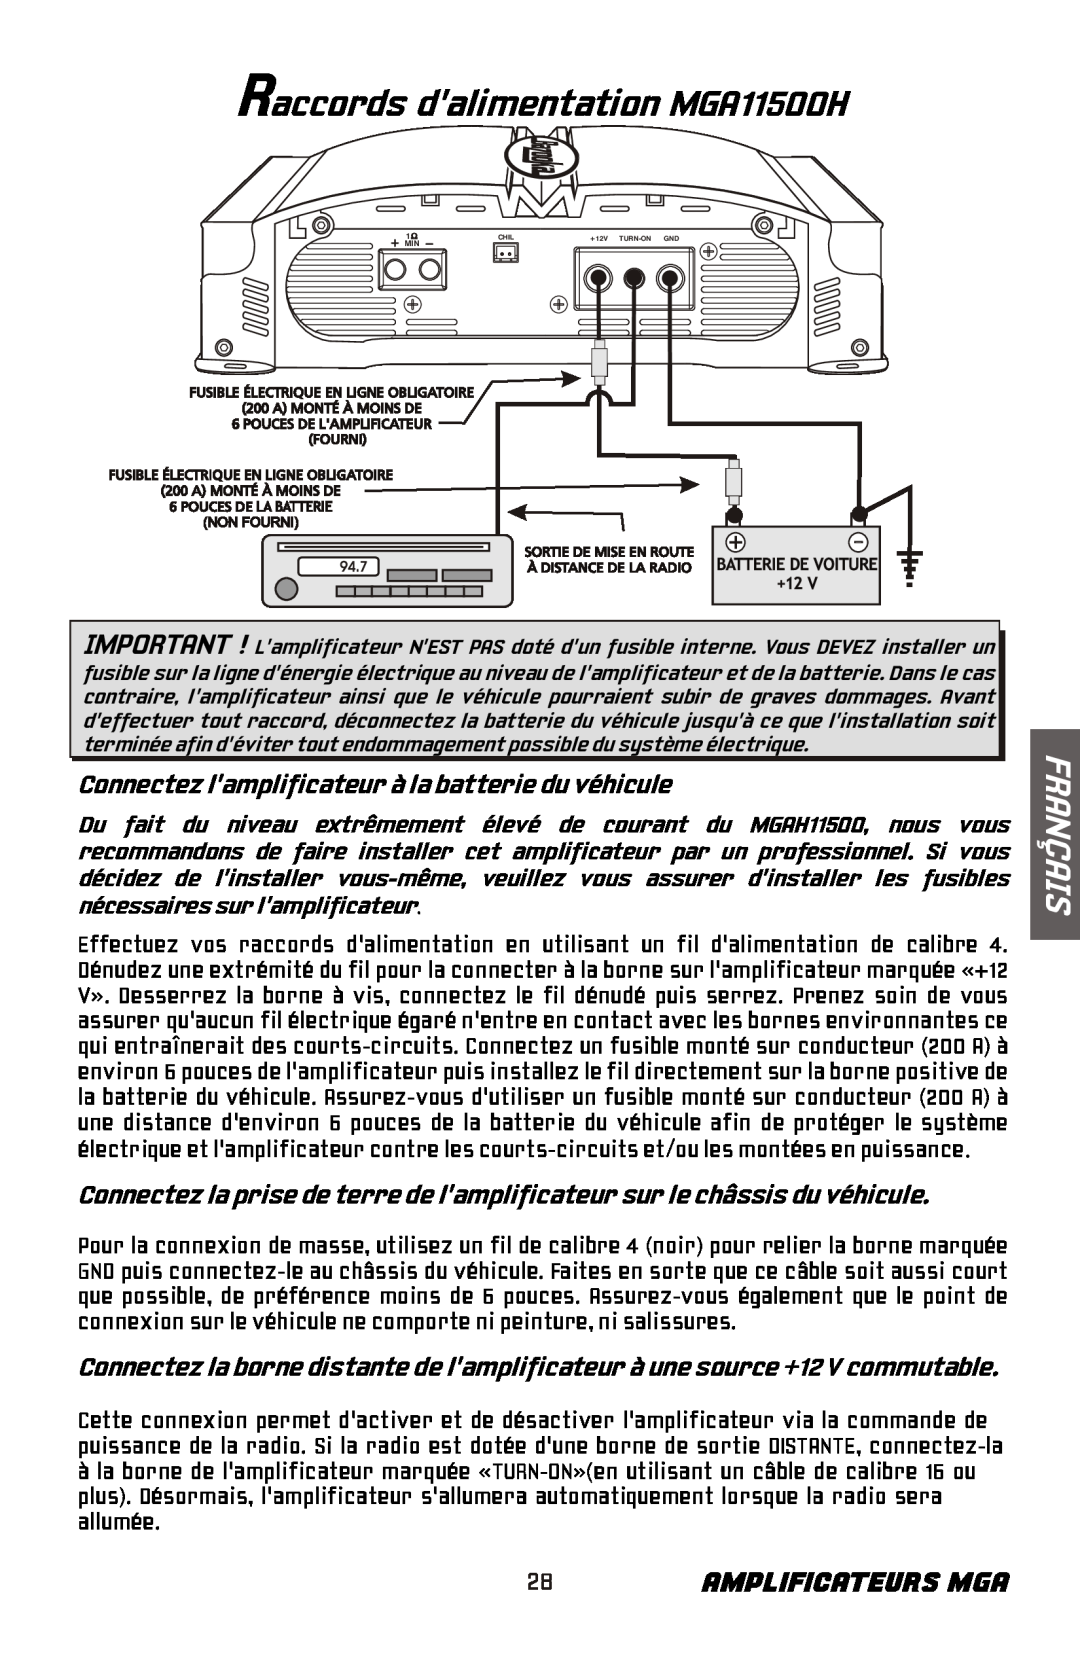 Bazooka MGA11000H manual Raccords dalimentation MGA11500H, 28AMPLIFICATEURS MGA, Français 